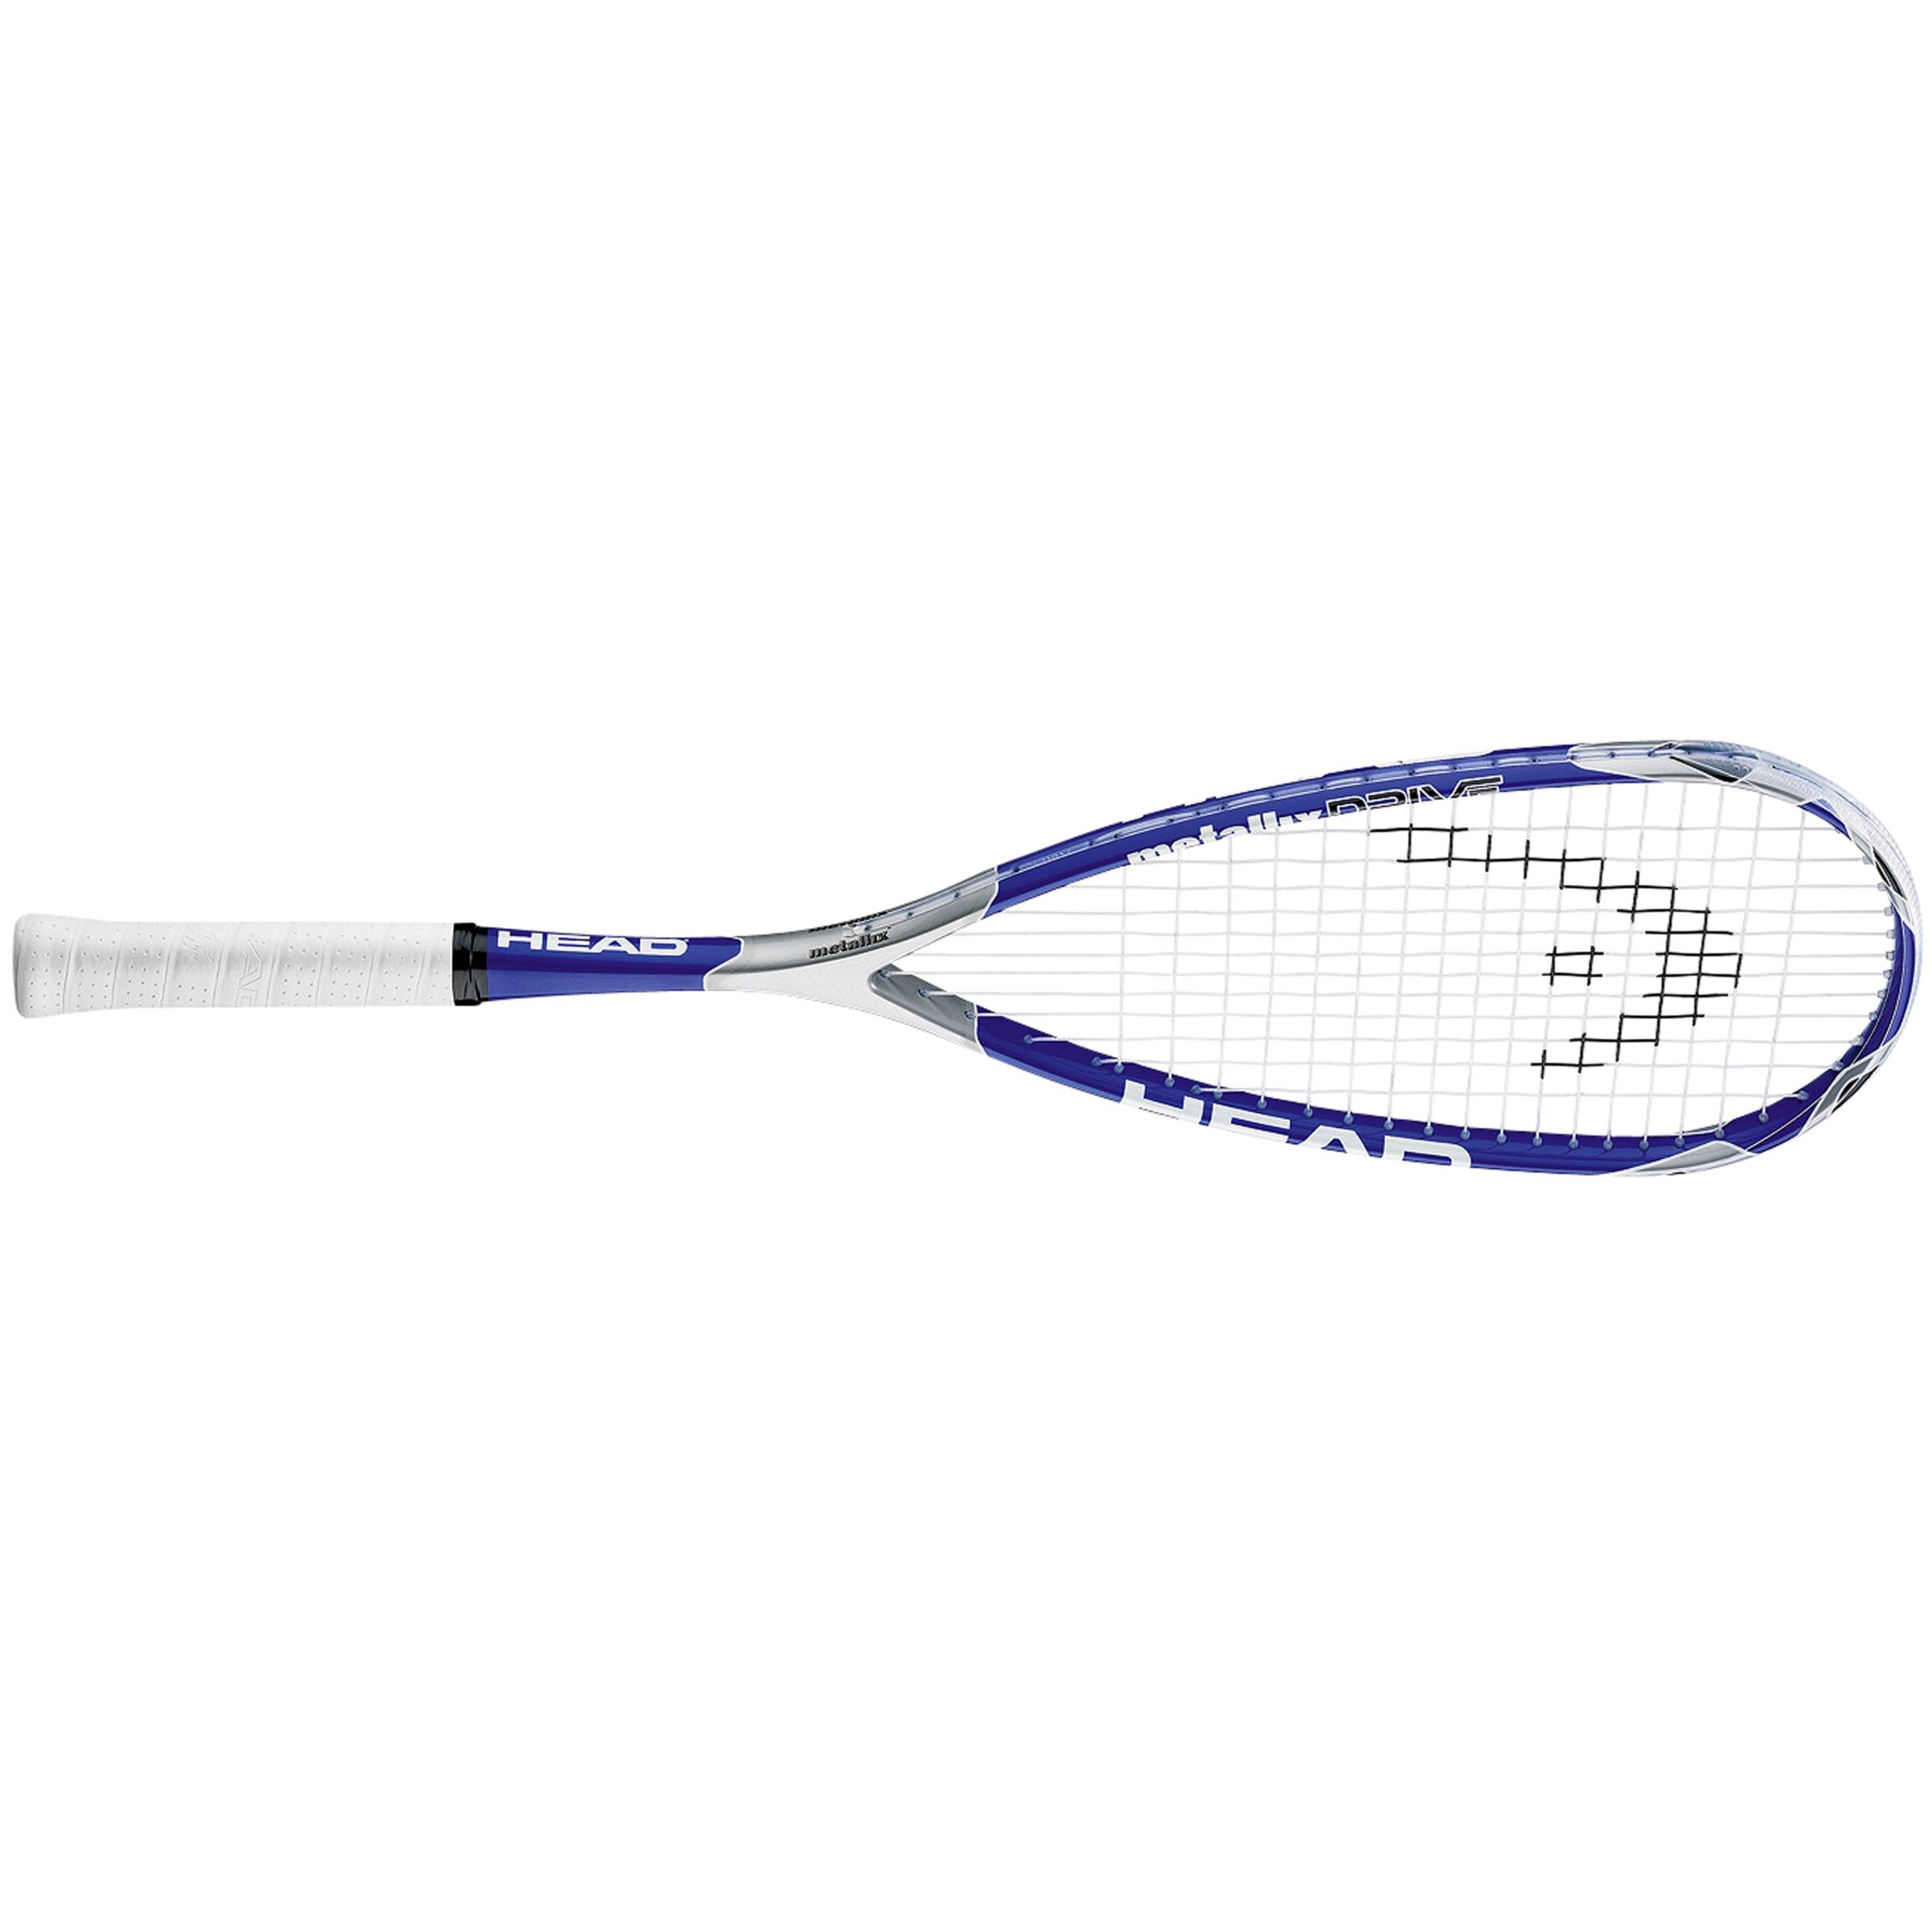 Metallix Drive Squash Racket, Blue